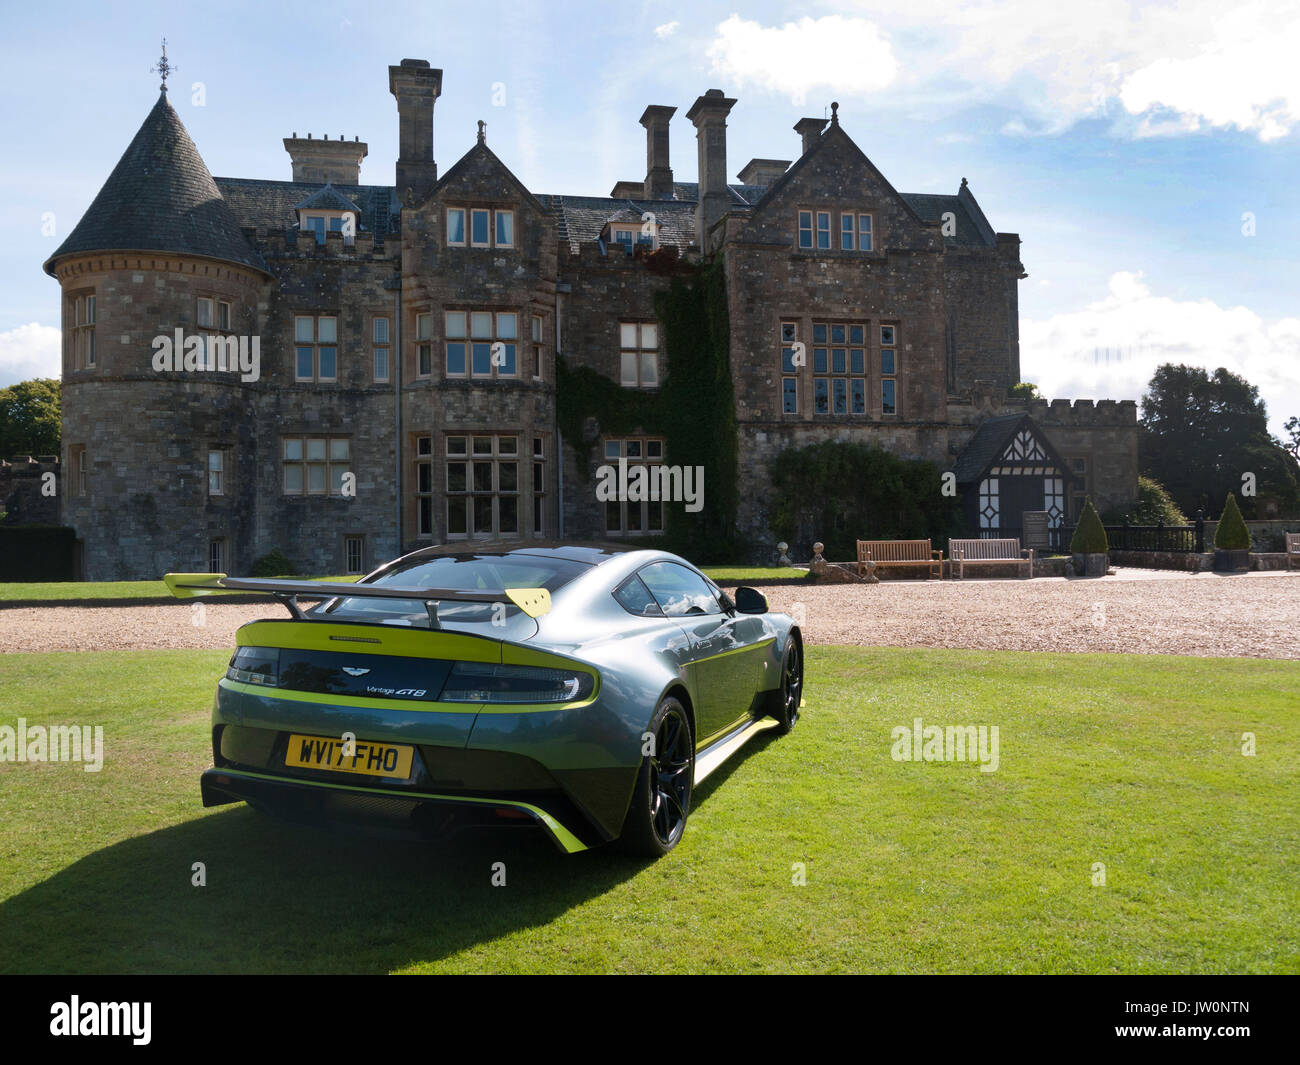 2017 Aston Martin Vantage GT8 Banque D'Images